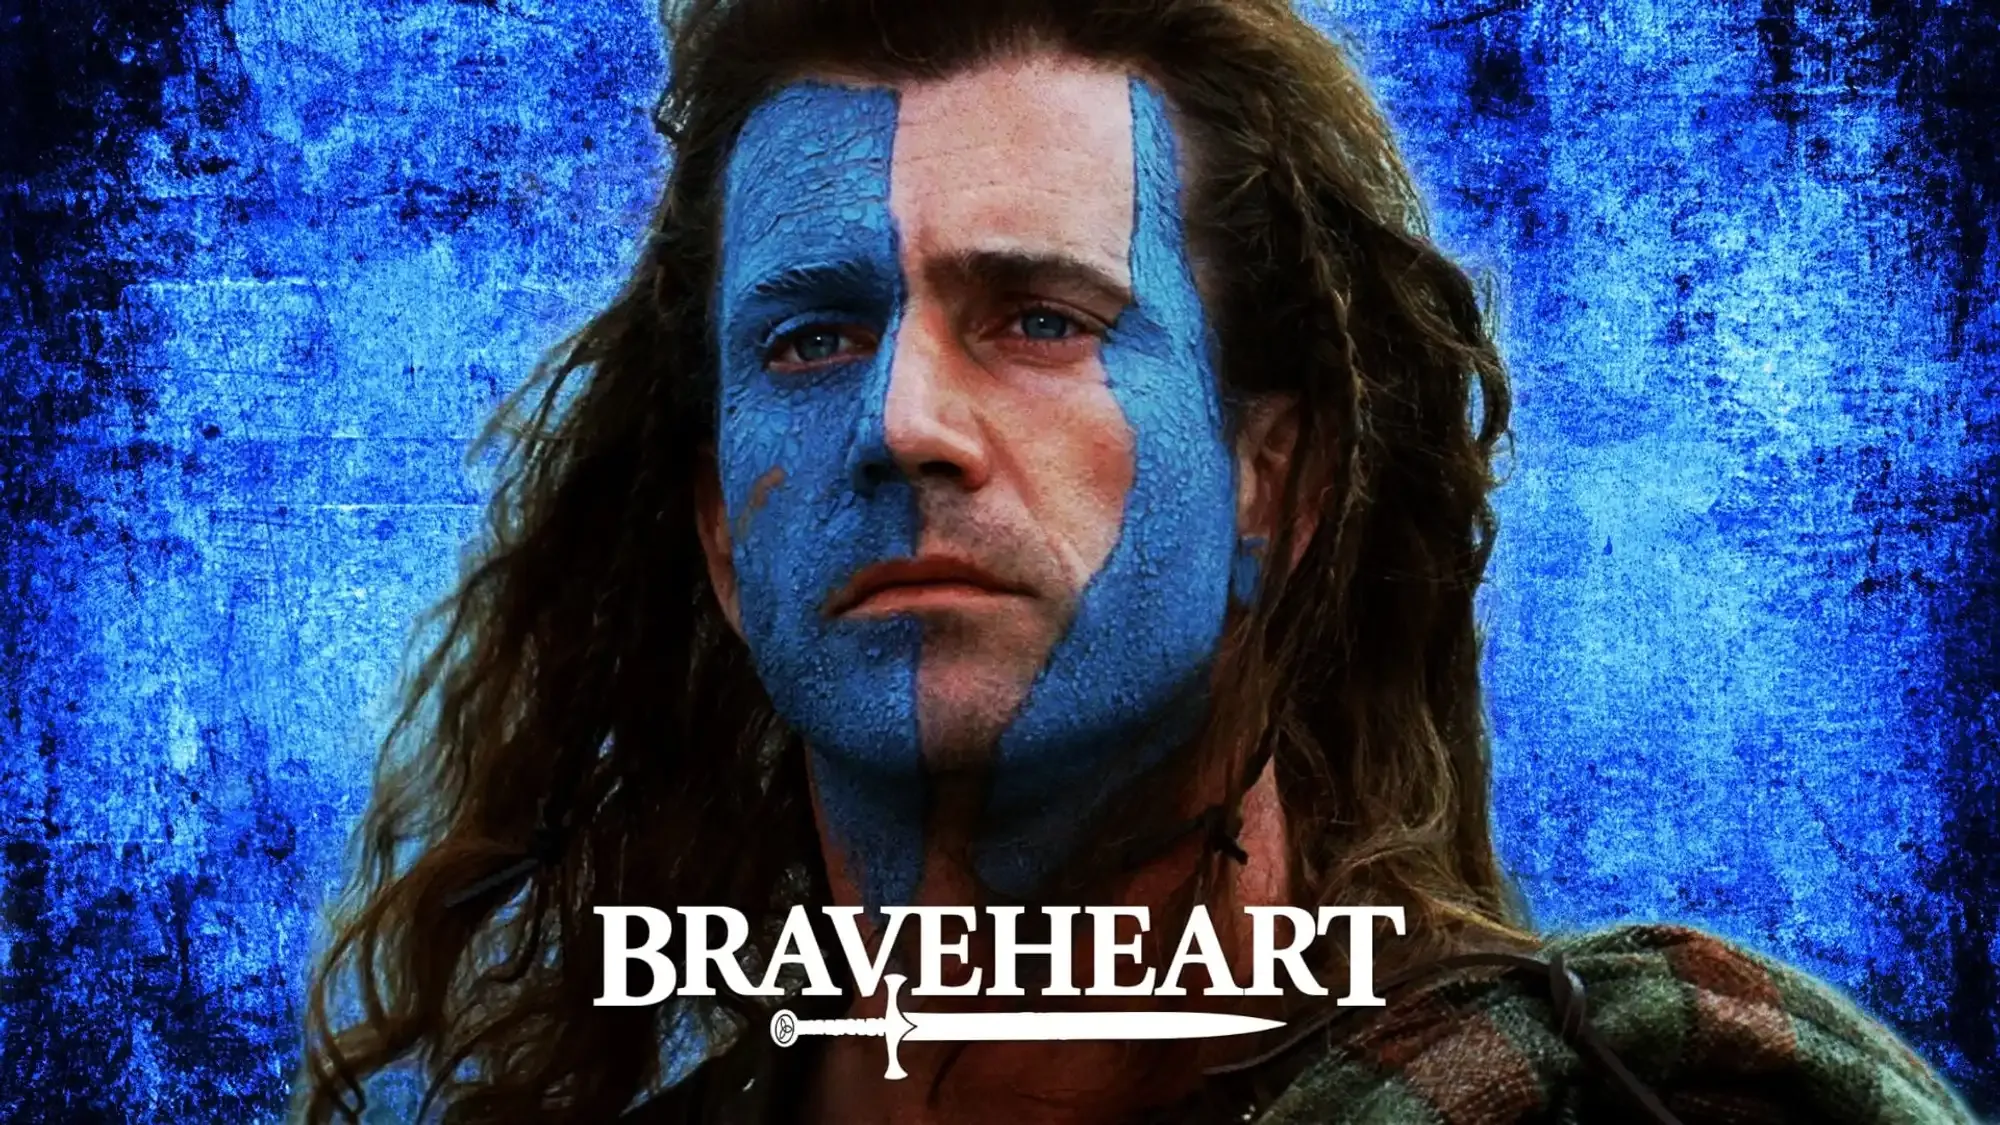 Braveheart movie review